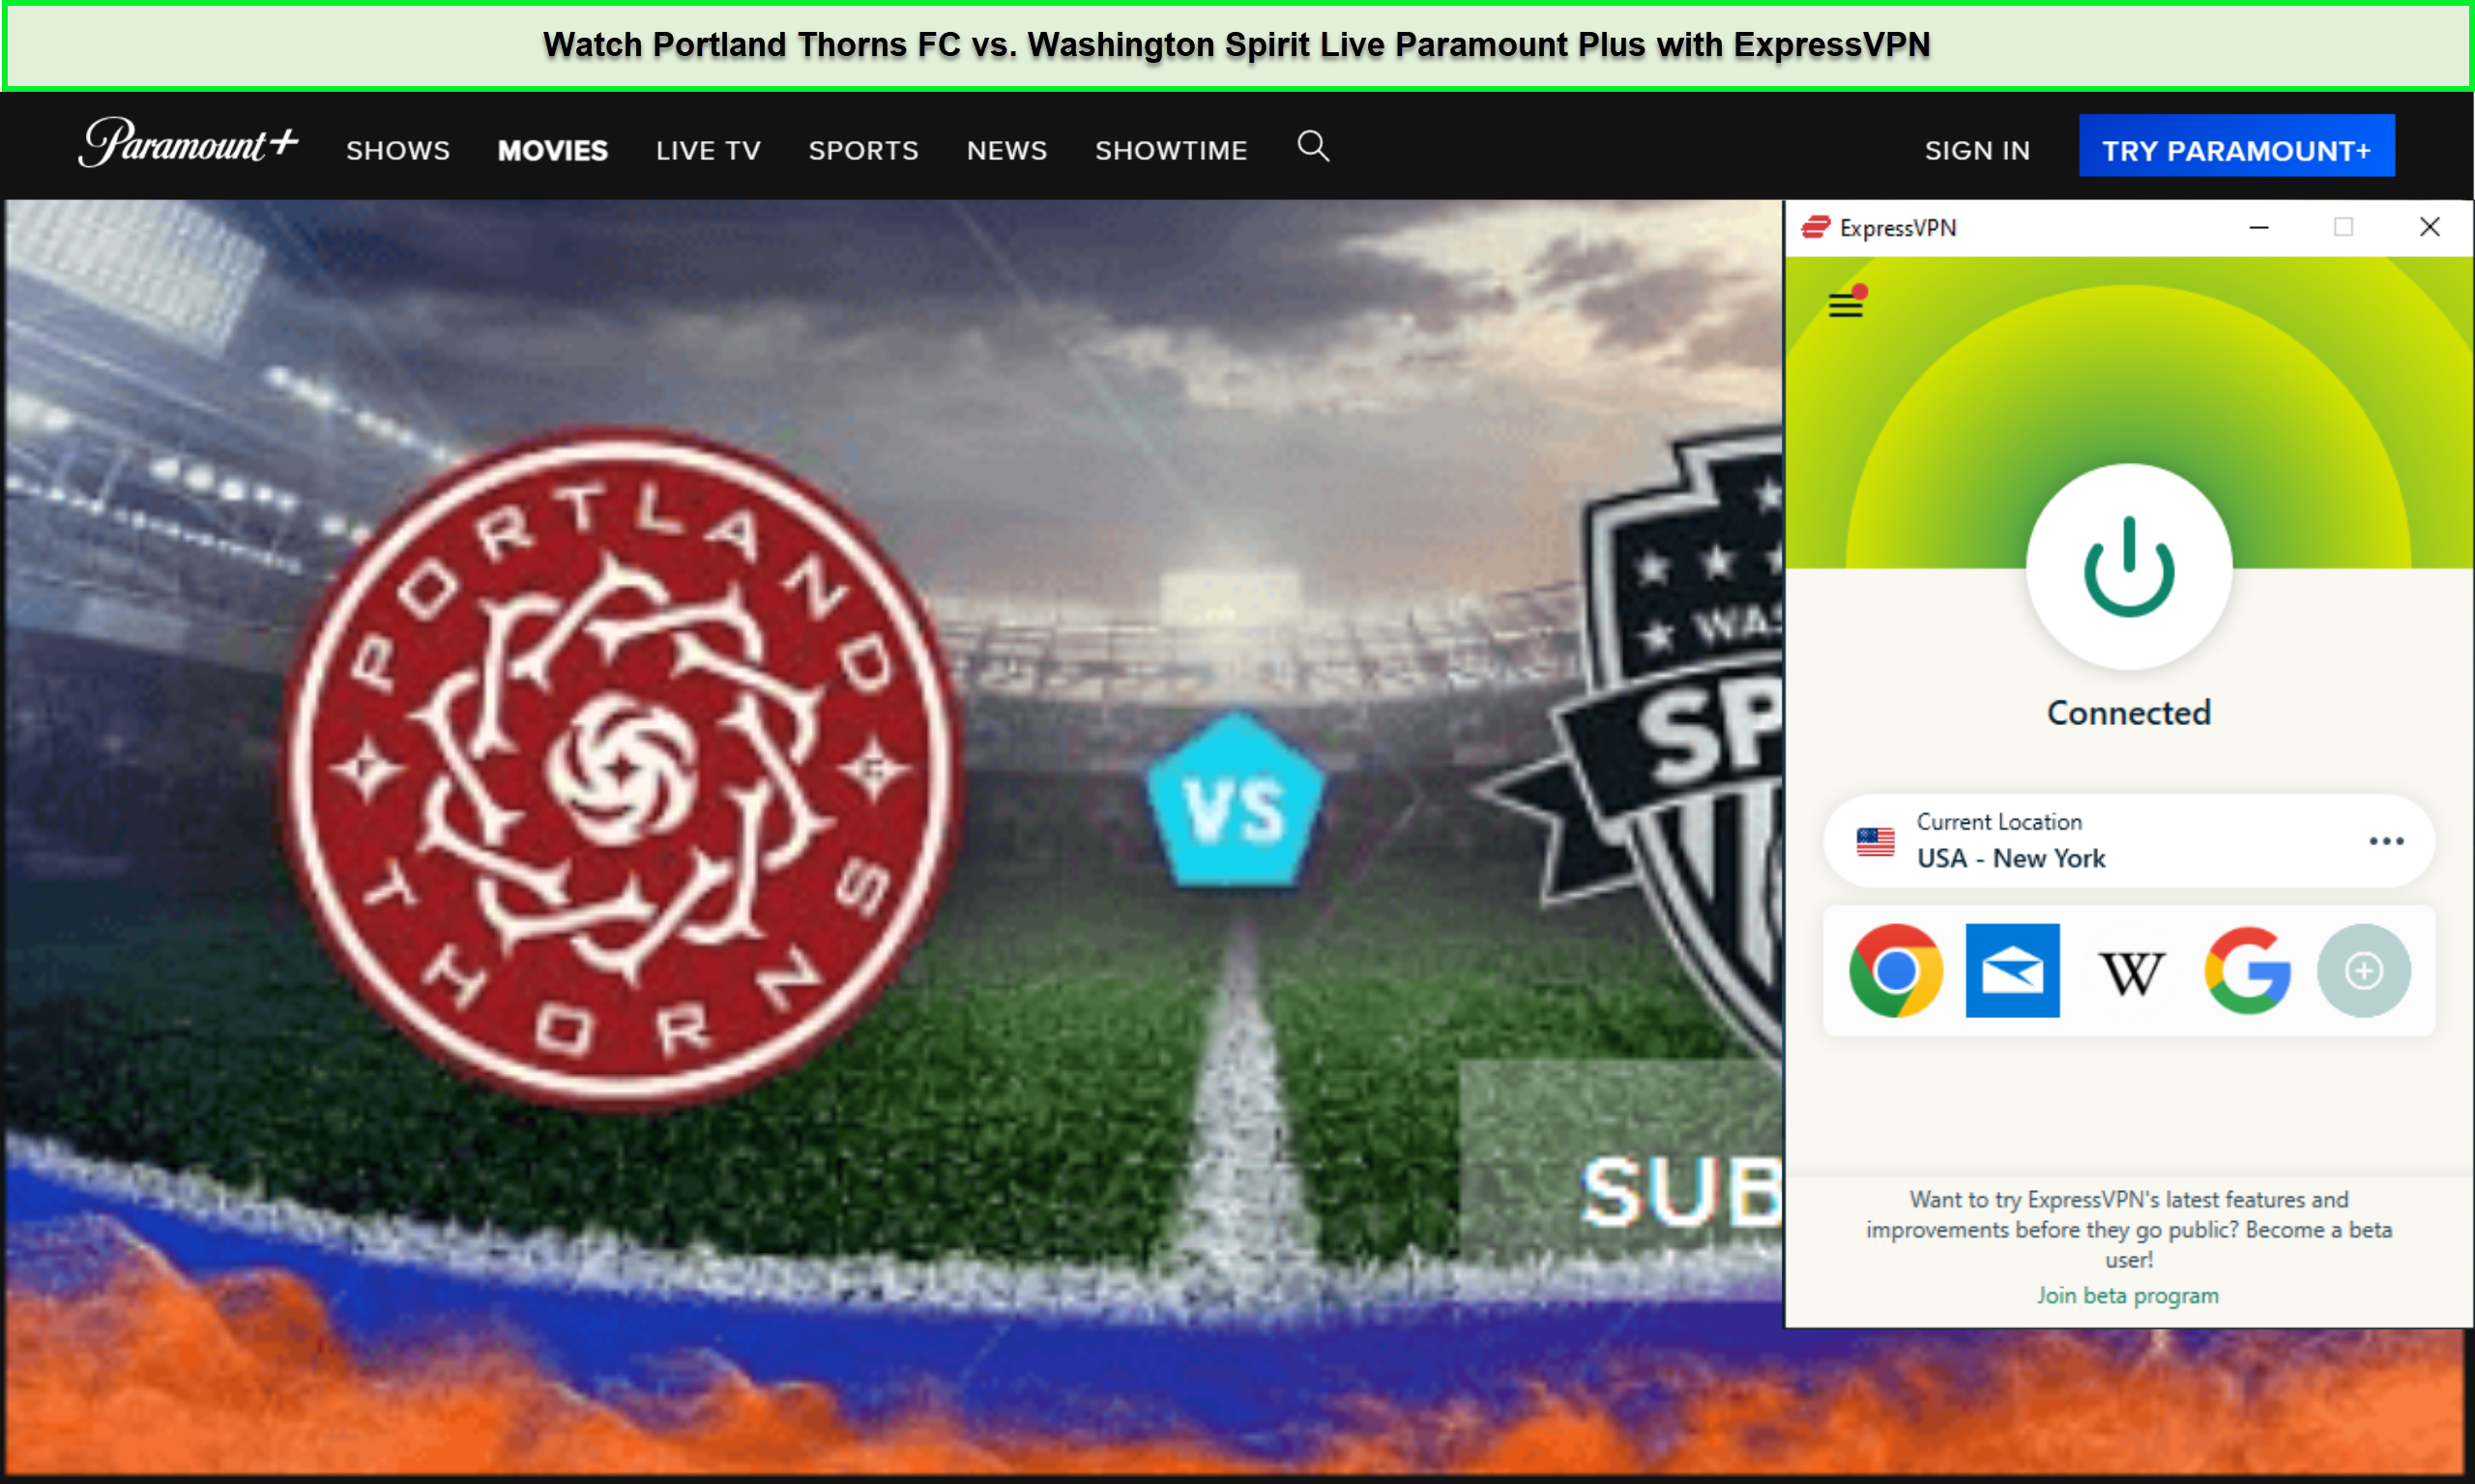 Watch-Portland-Thorns-FC-vs-Washington-Spirit-Live-in-UK-Paramount-Plus-with-ExpressVPN